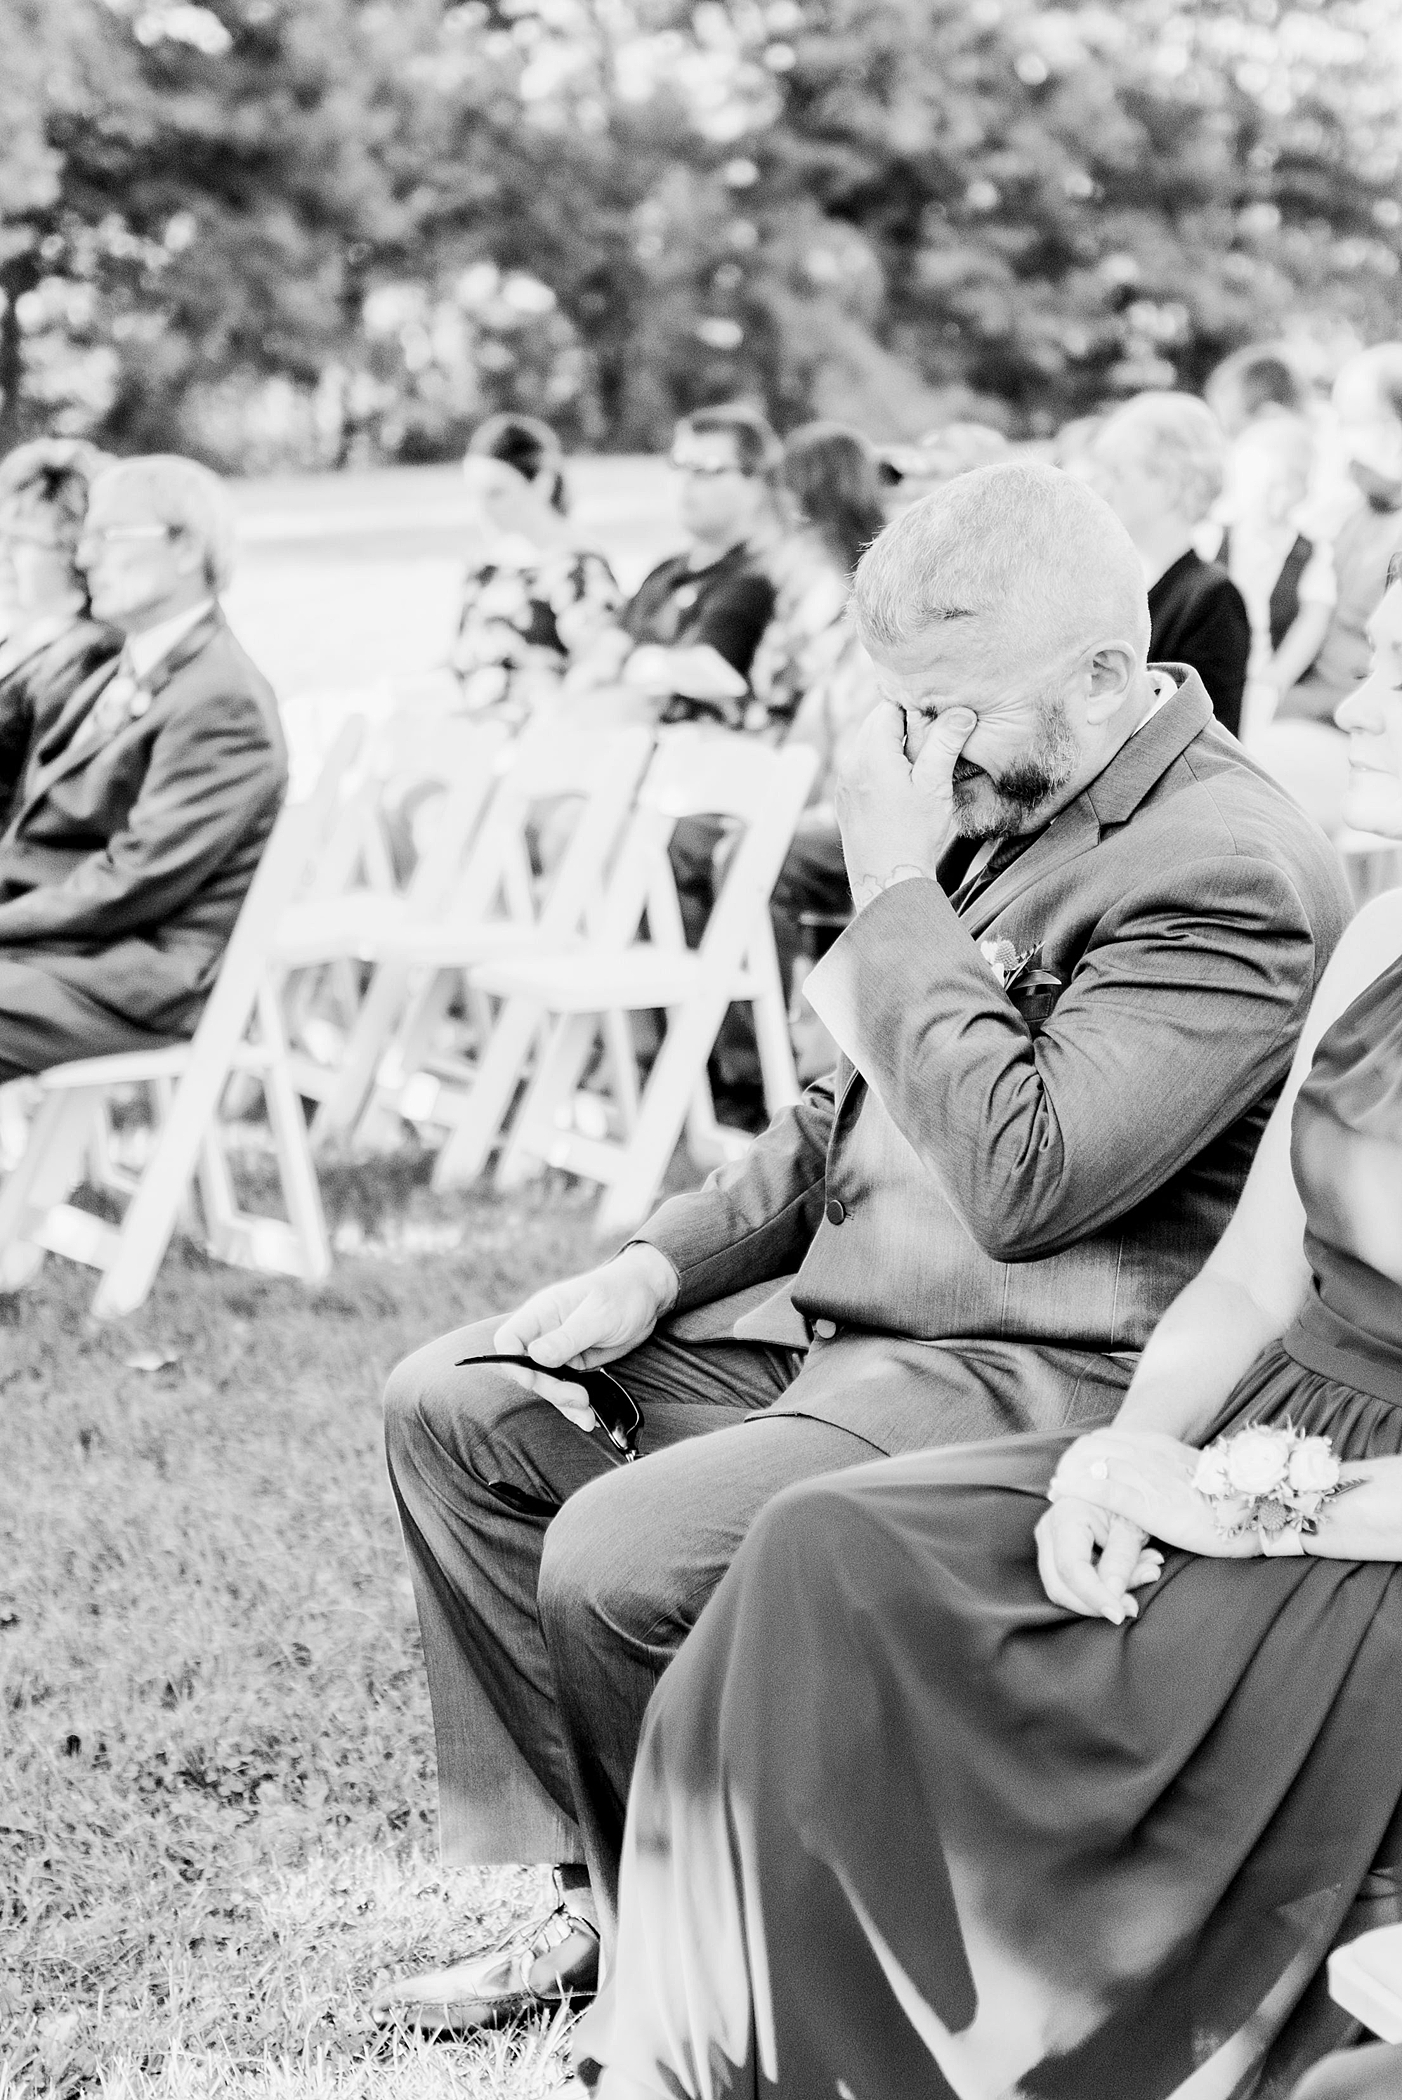 Wisconsin Wedding Photographer - Larissa Marie Photography